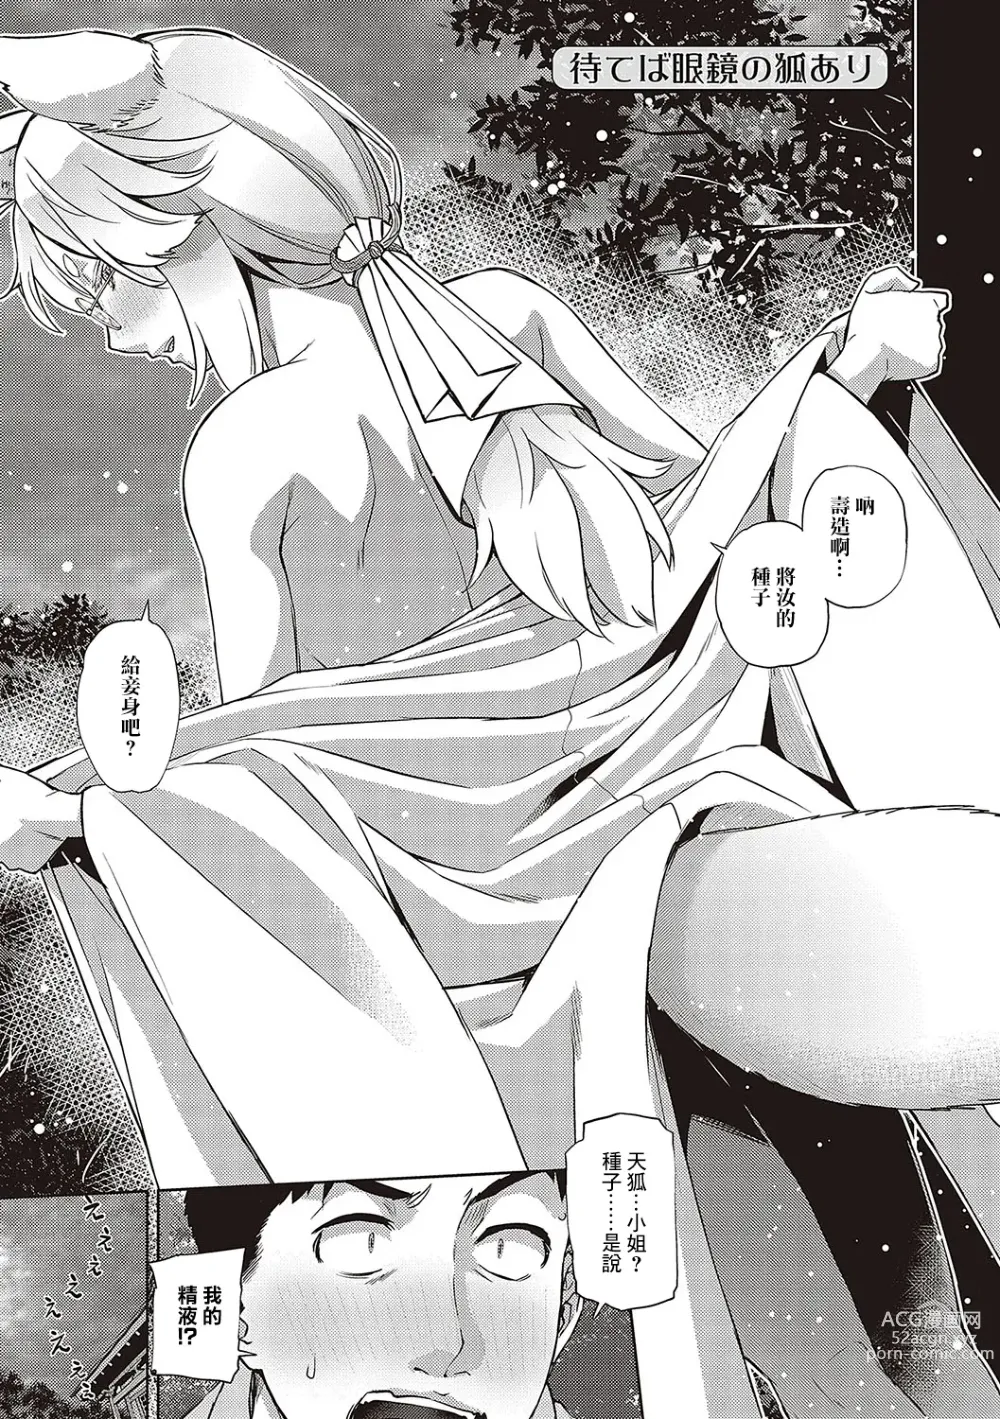 Page 1 of manga Mateba Megane no Kitsune Ari